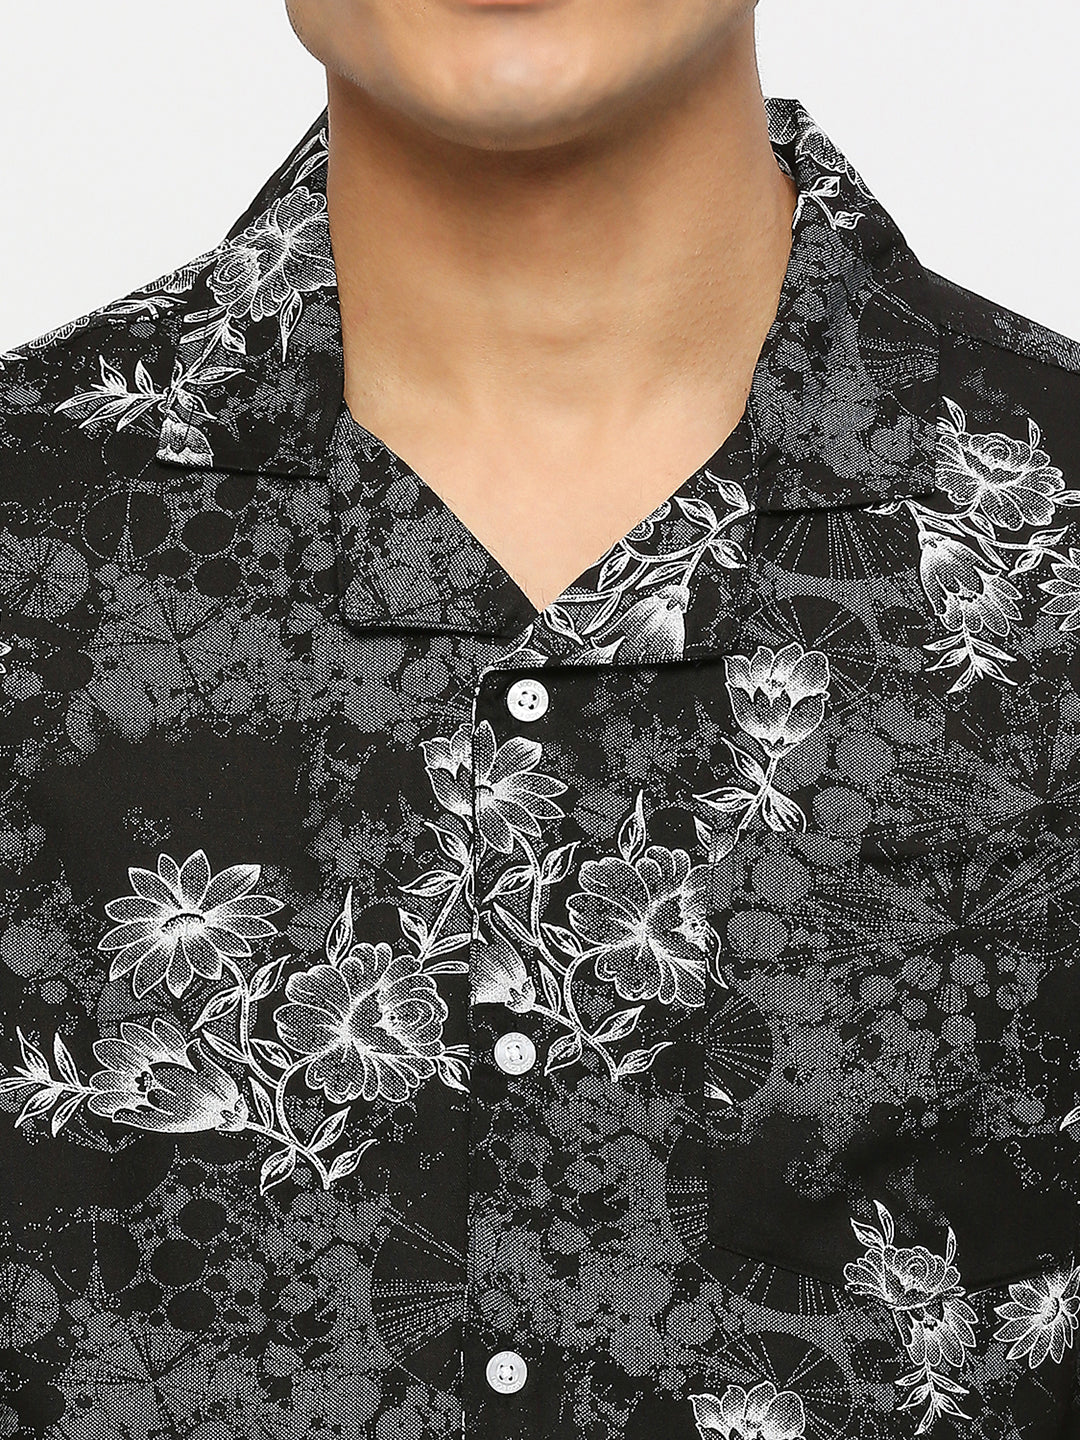 Moonlight Floral Print Black Shirt